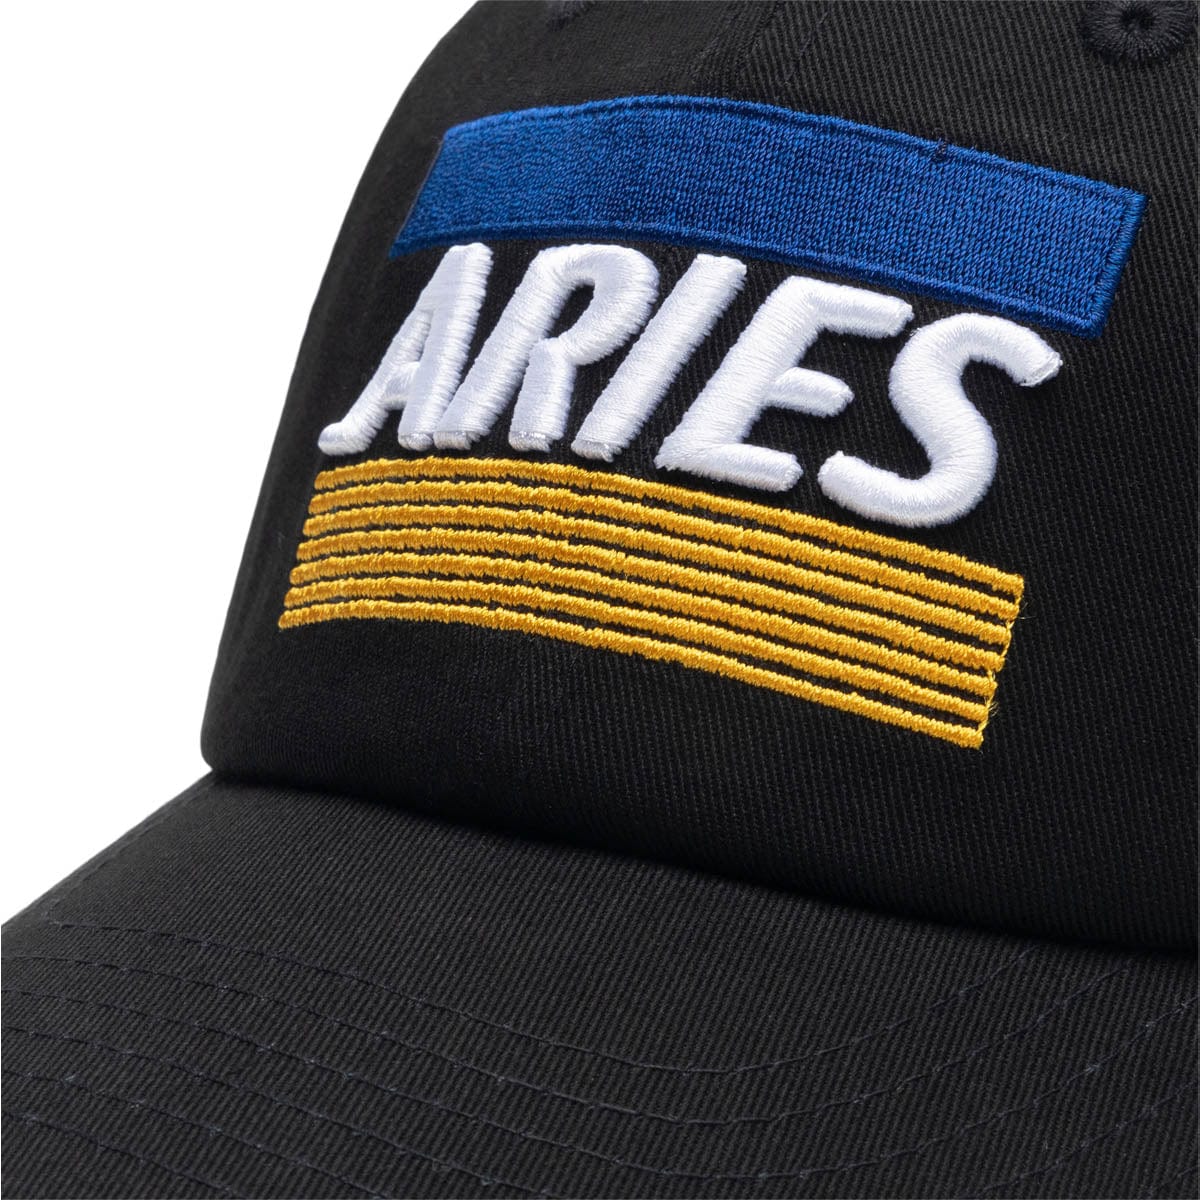 Aries Headwear BLACK / O/S CREDIT CARD CAP